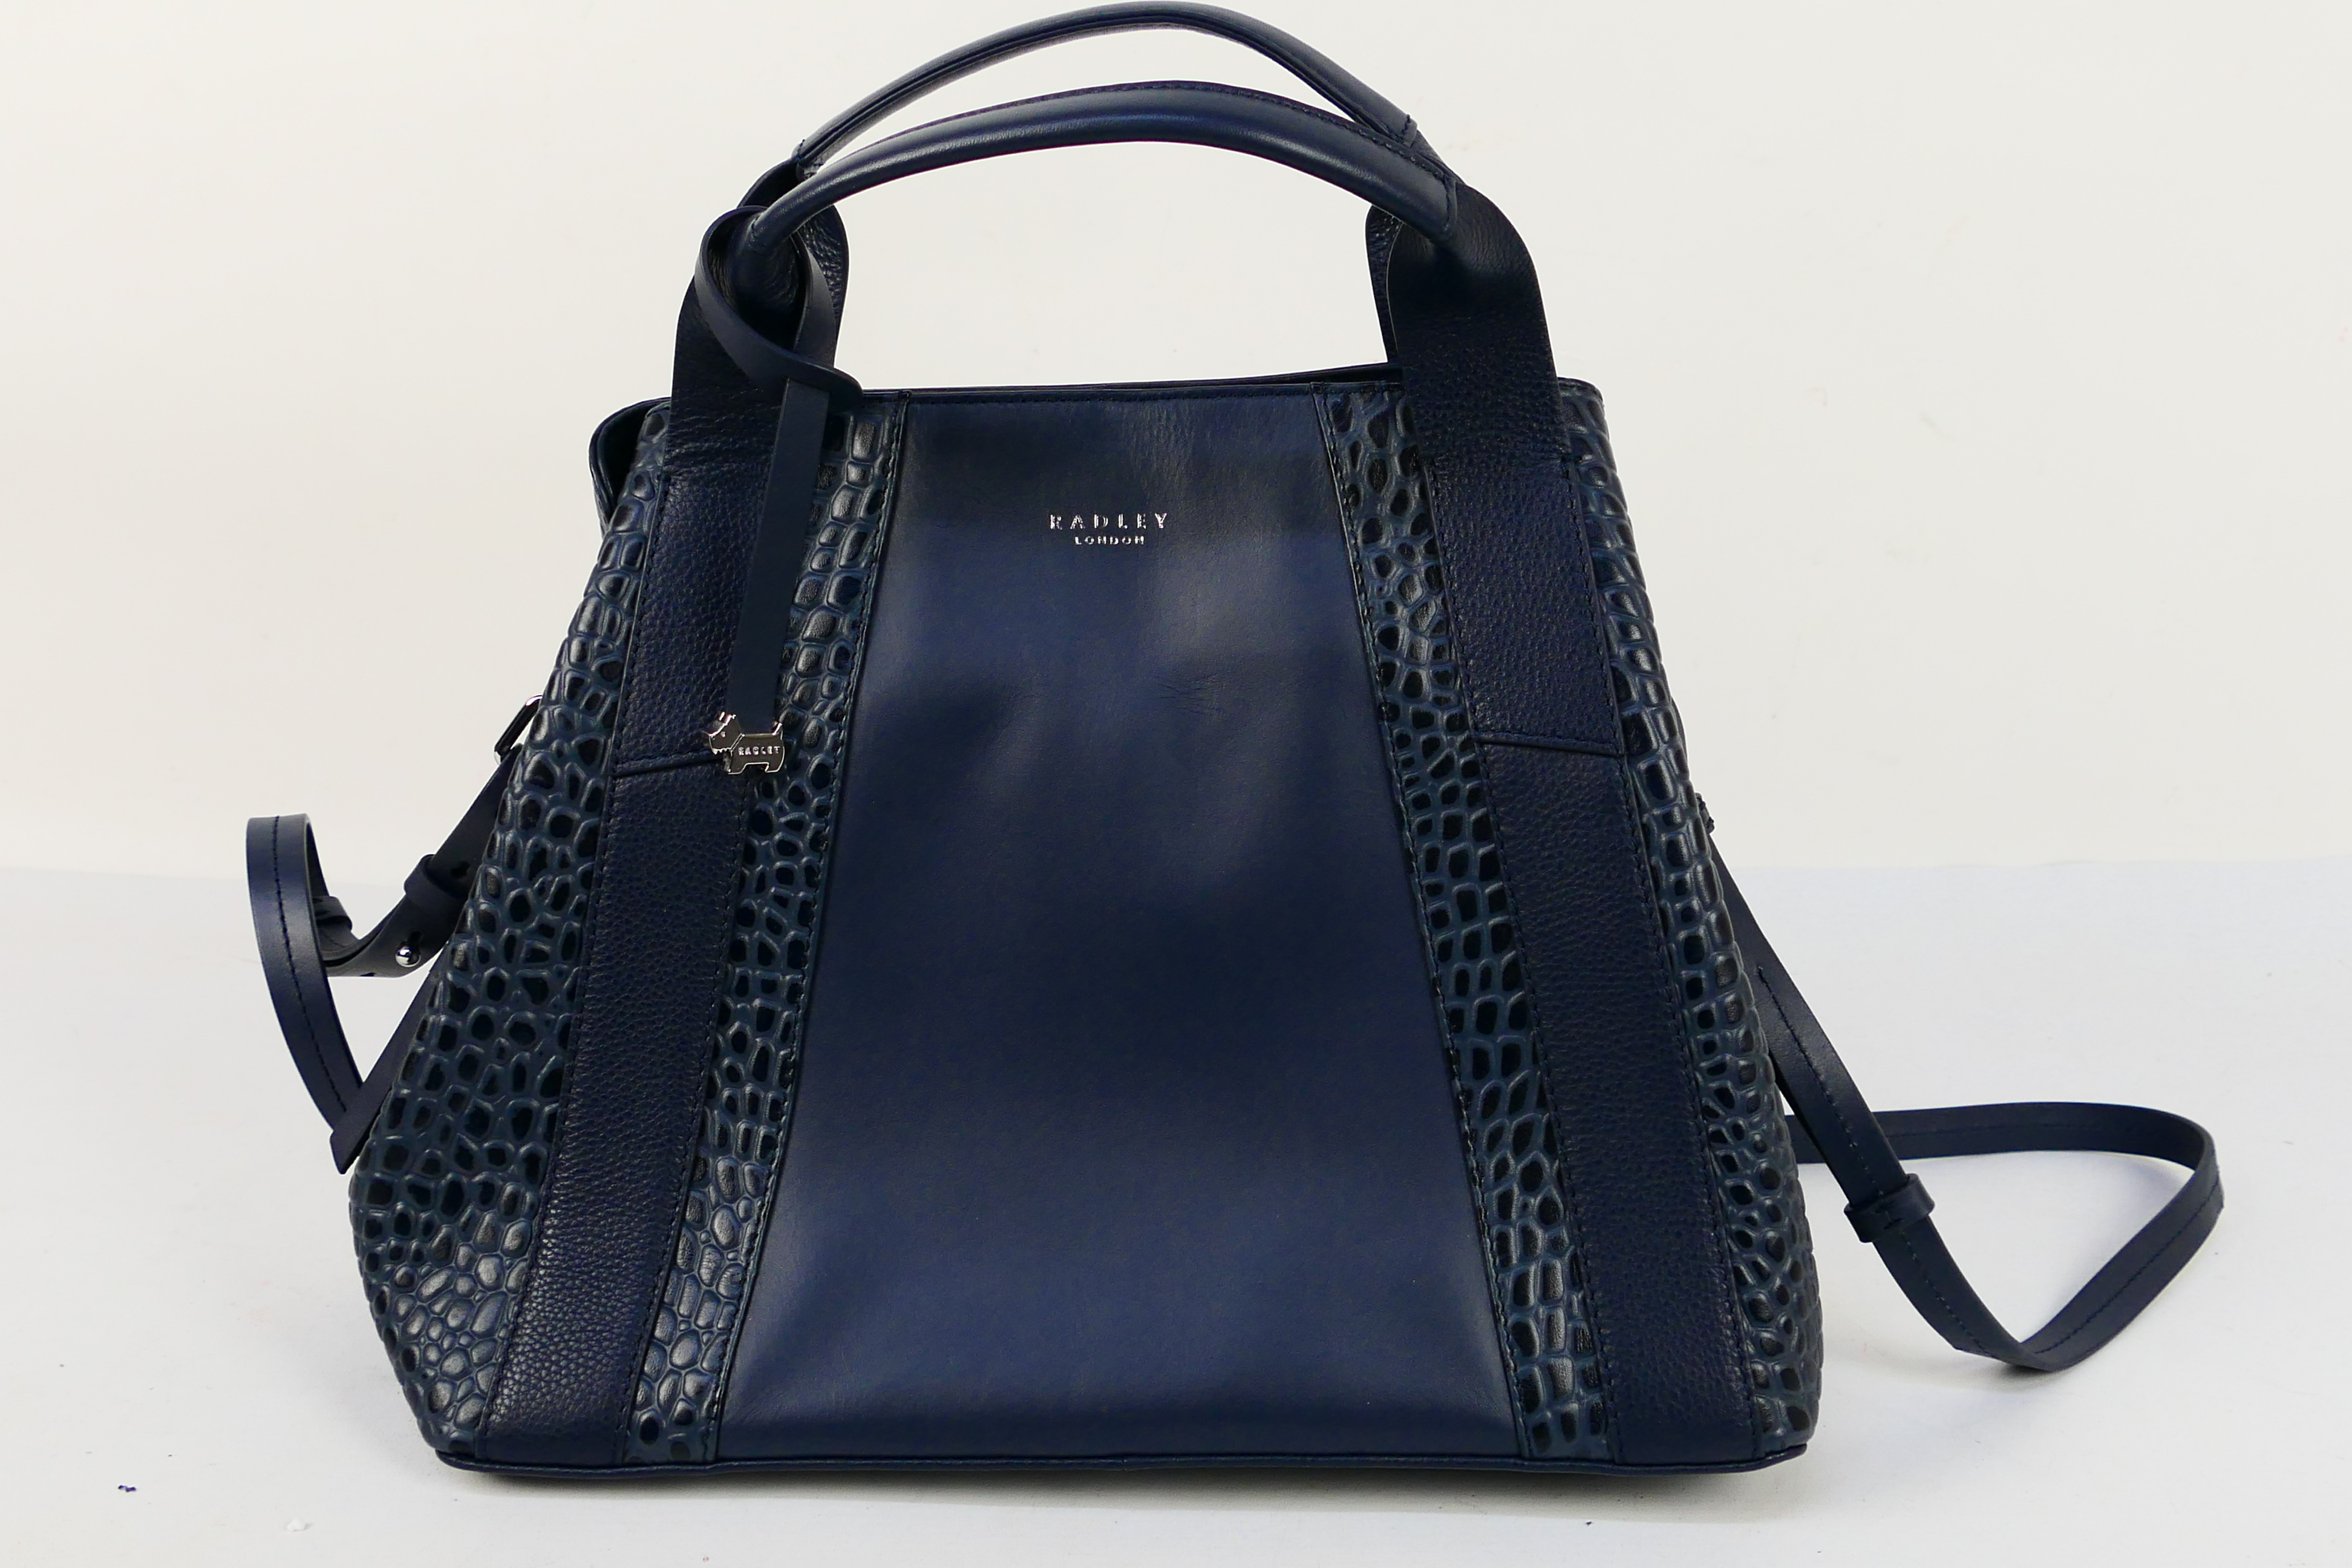 Radley - A dark blue Radley London leather handbag - Handbag has two interior zip pockets,